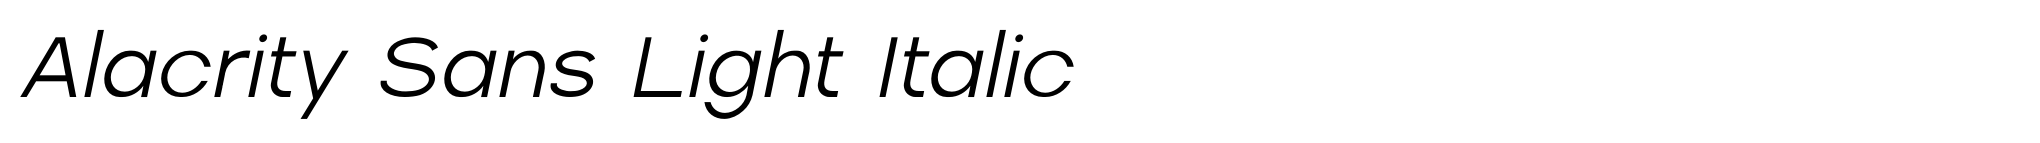 Alacrity Sans Light Italic image